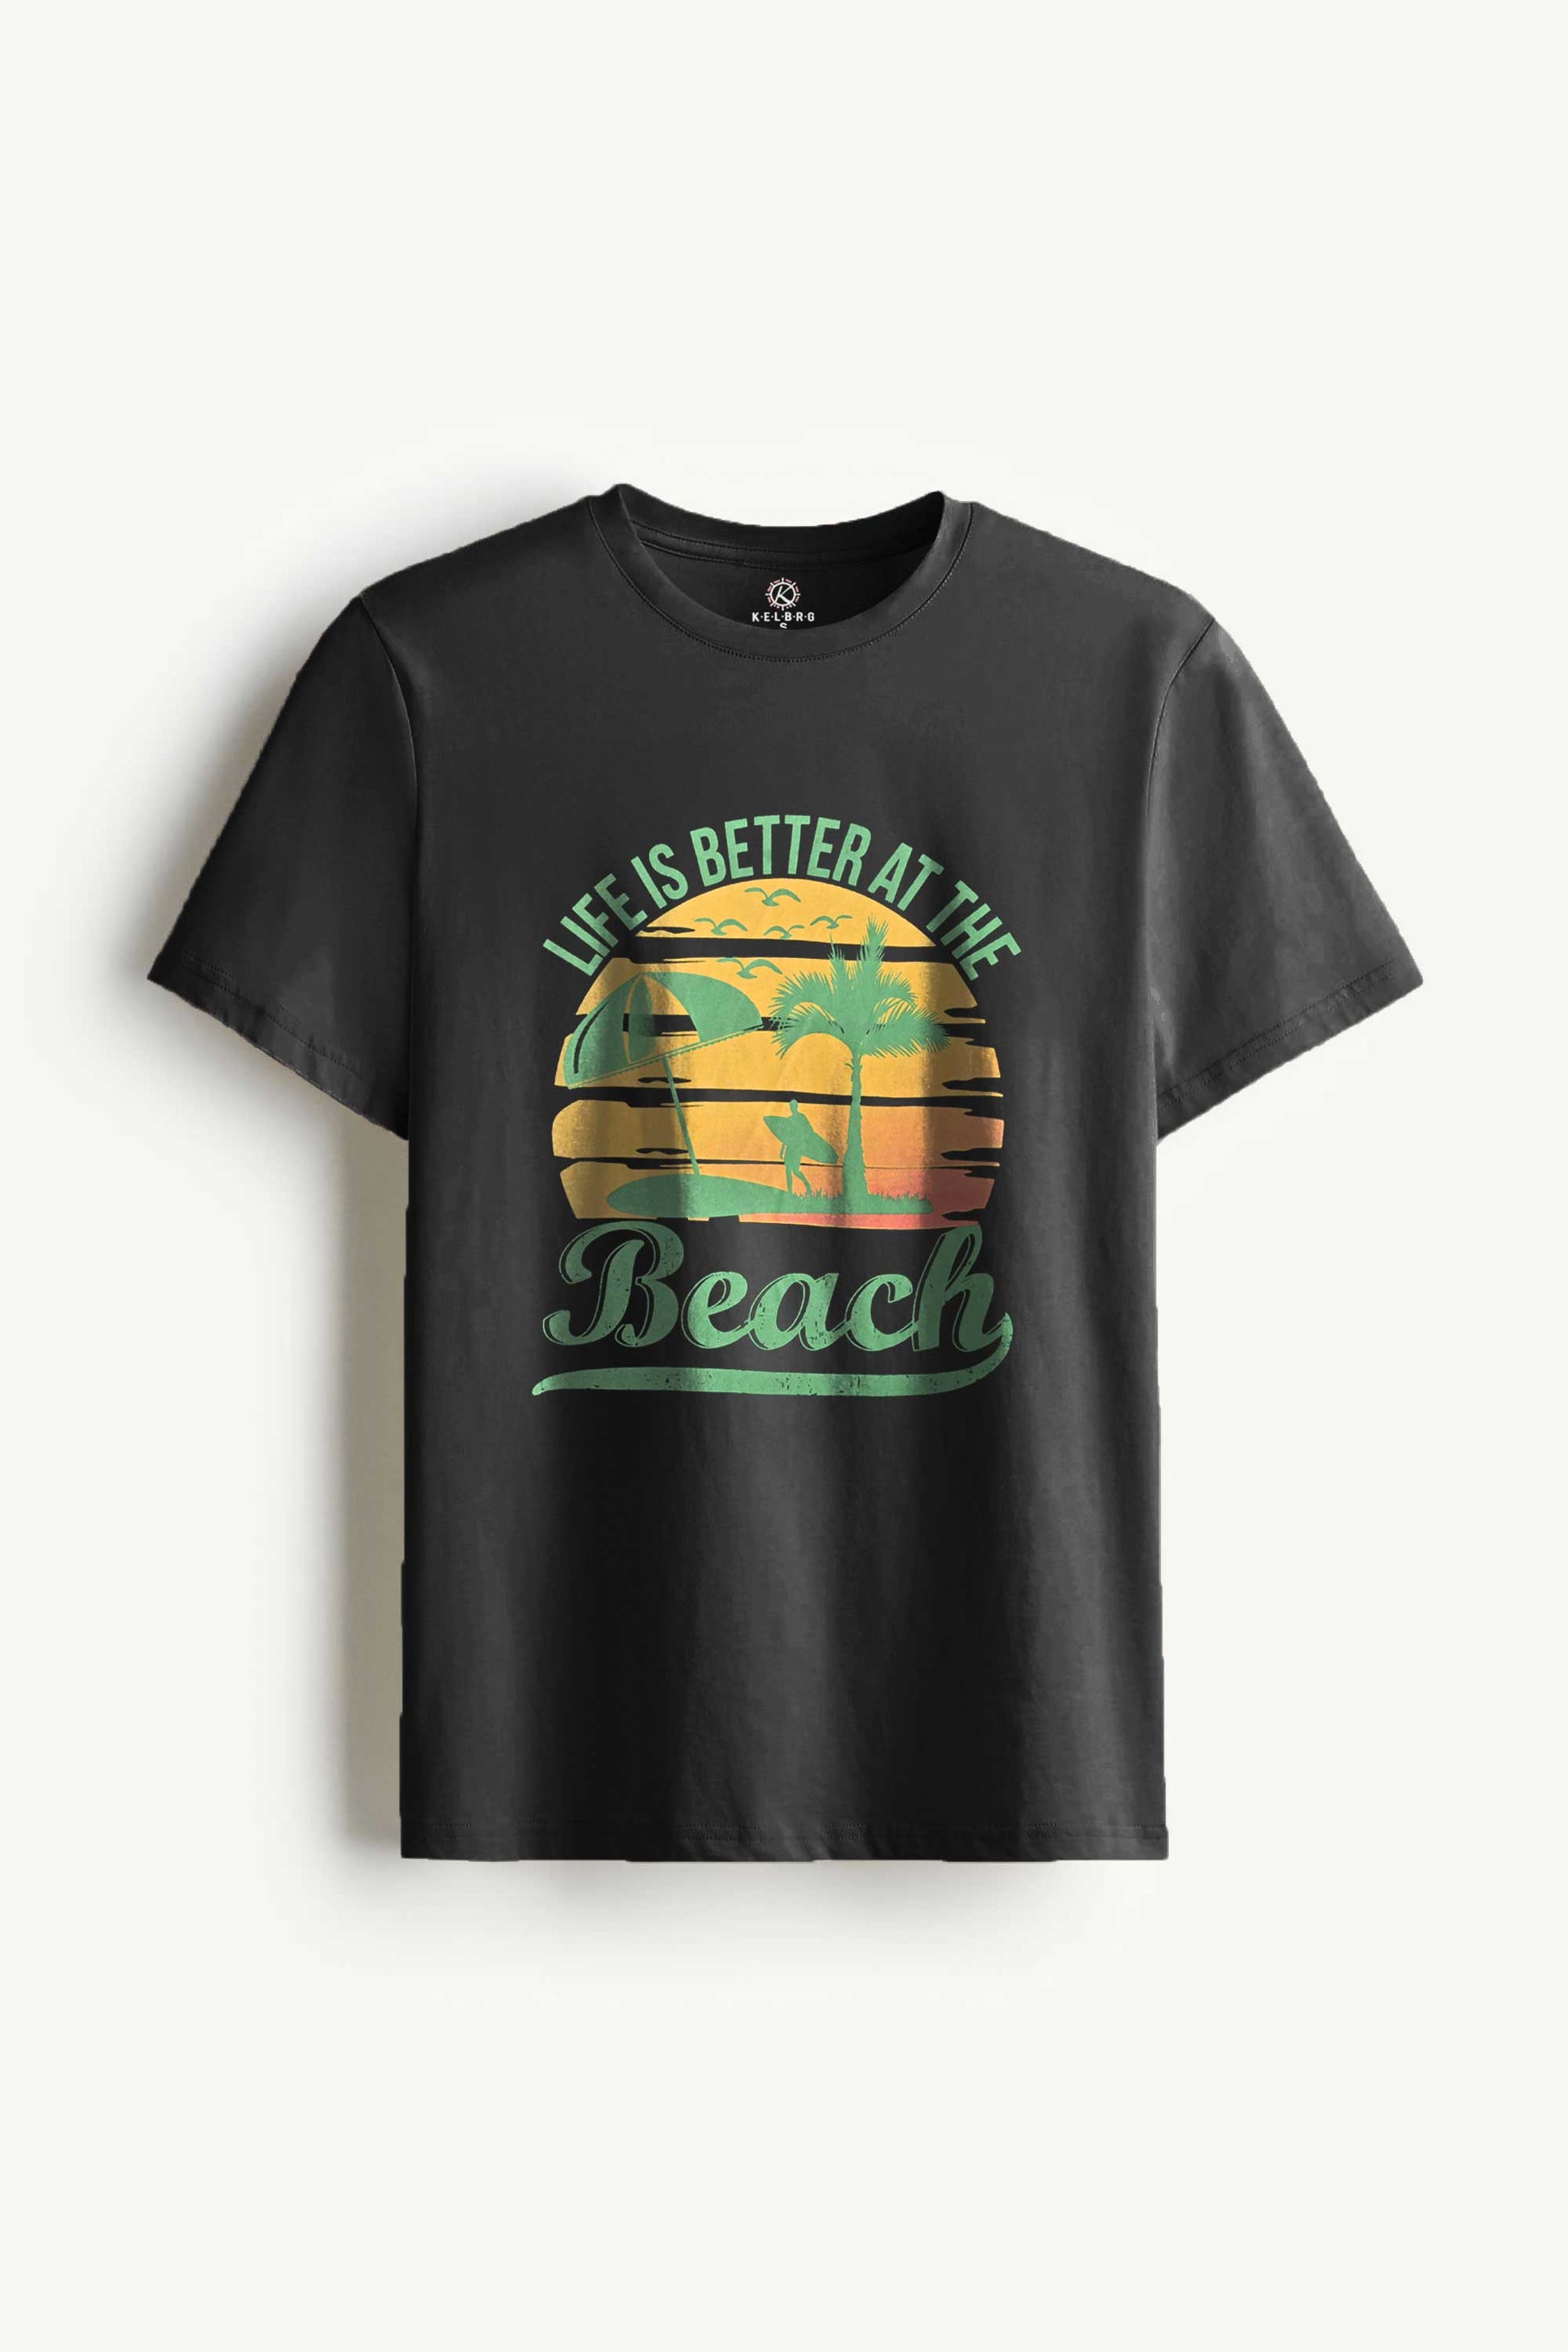 Kelbrg Men's Better At The Beach Printed Classic Tee Shirt